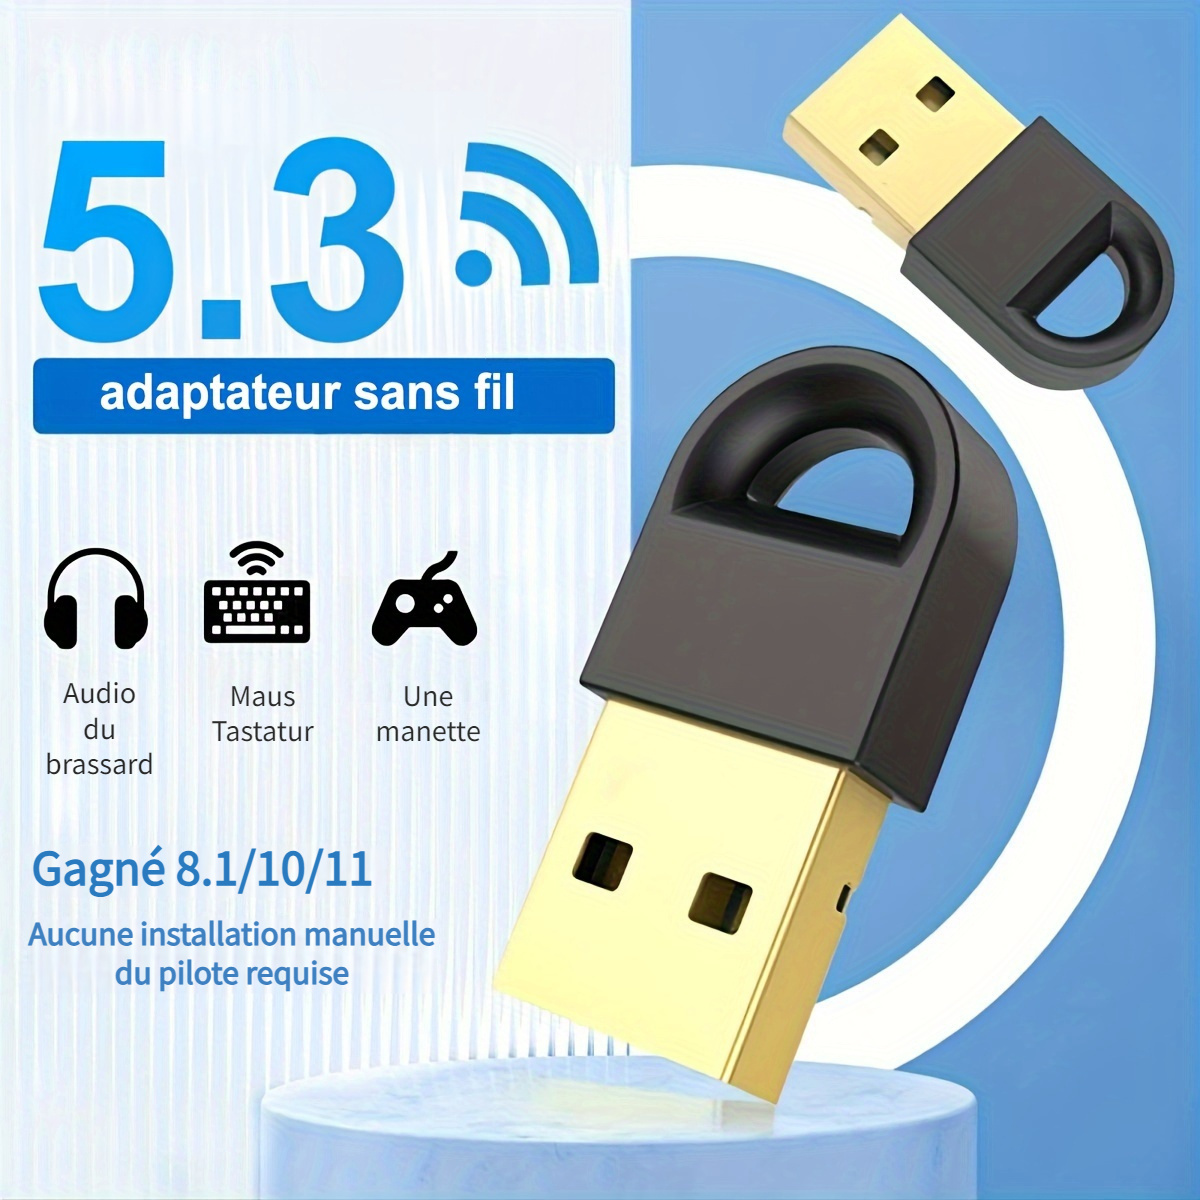 Dongle Bluetooth 5.3 - Cle Bluetooth USB pour PC - Adaptateur